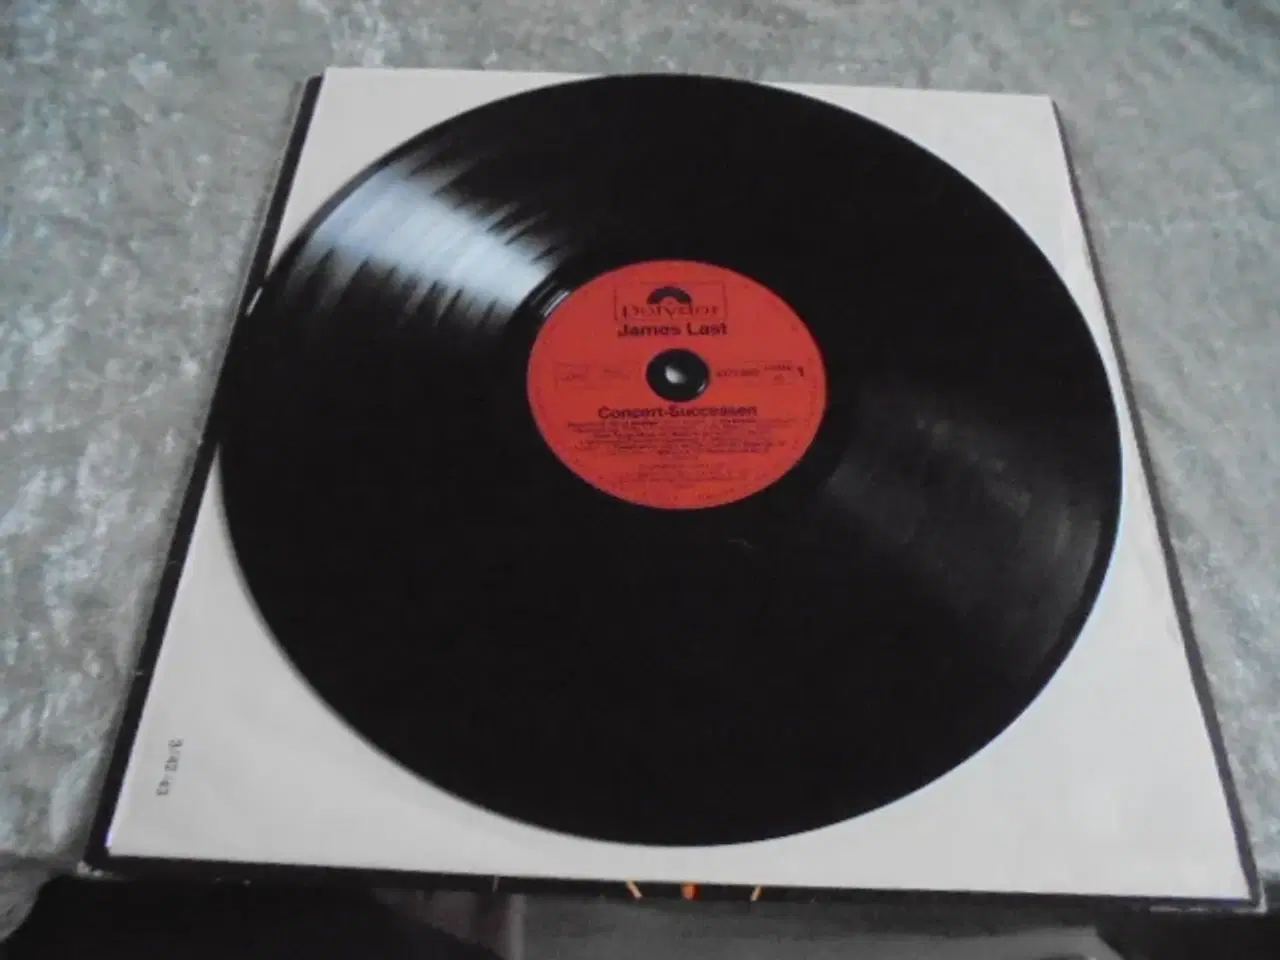 Billede 3 - LP: James Last Concert-Successen-den lækre klassis